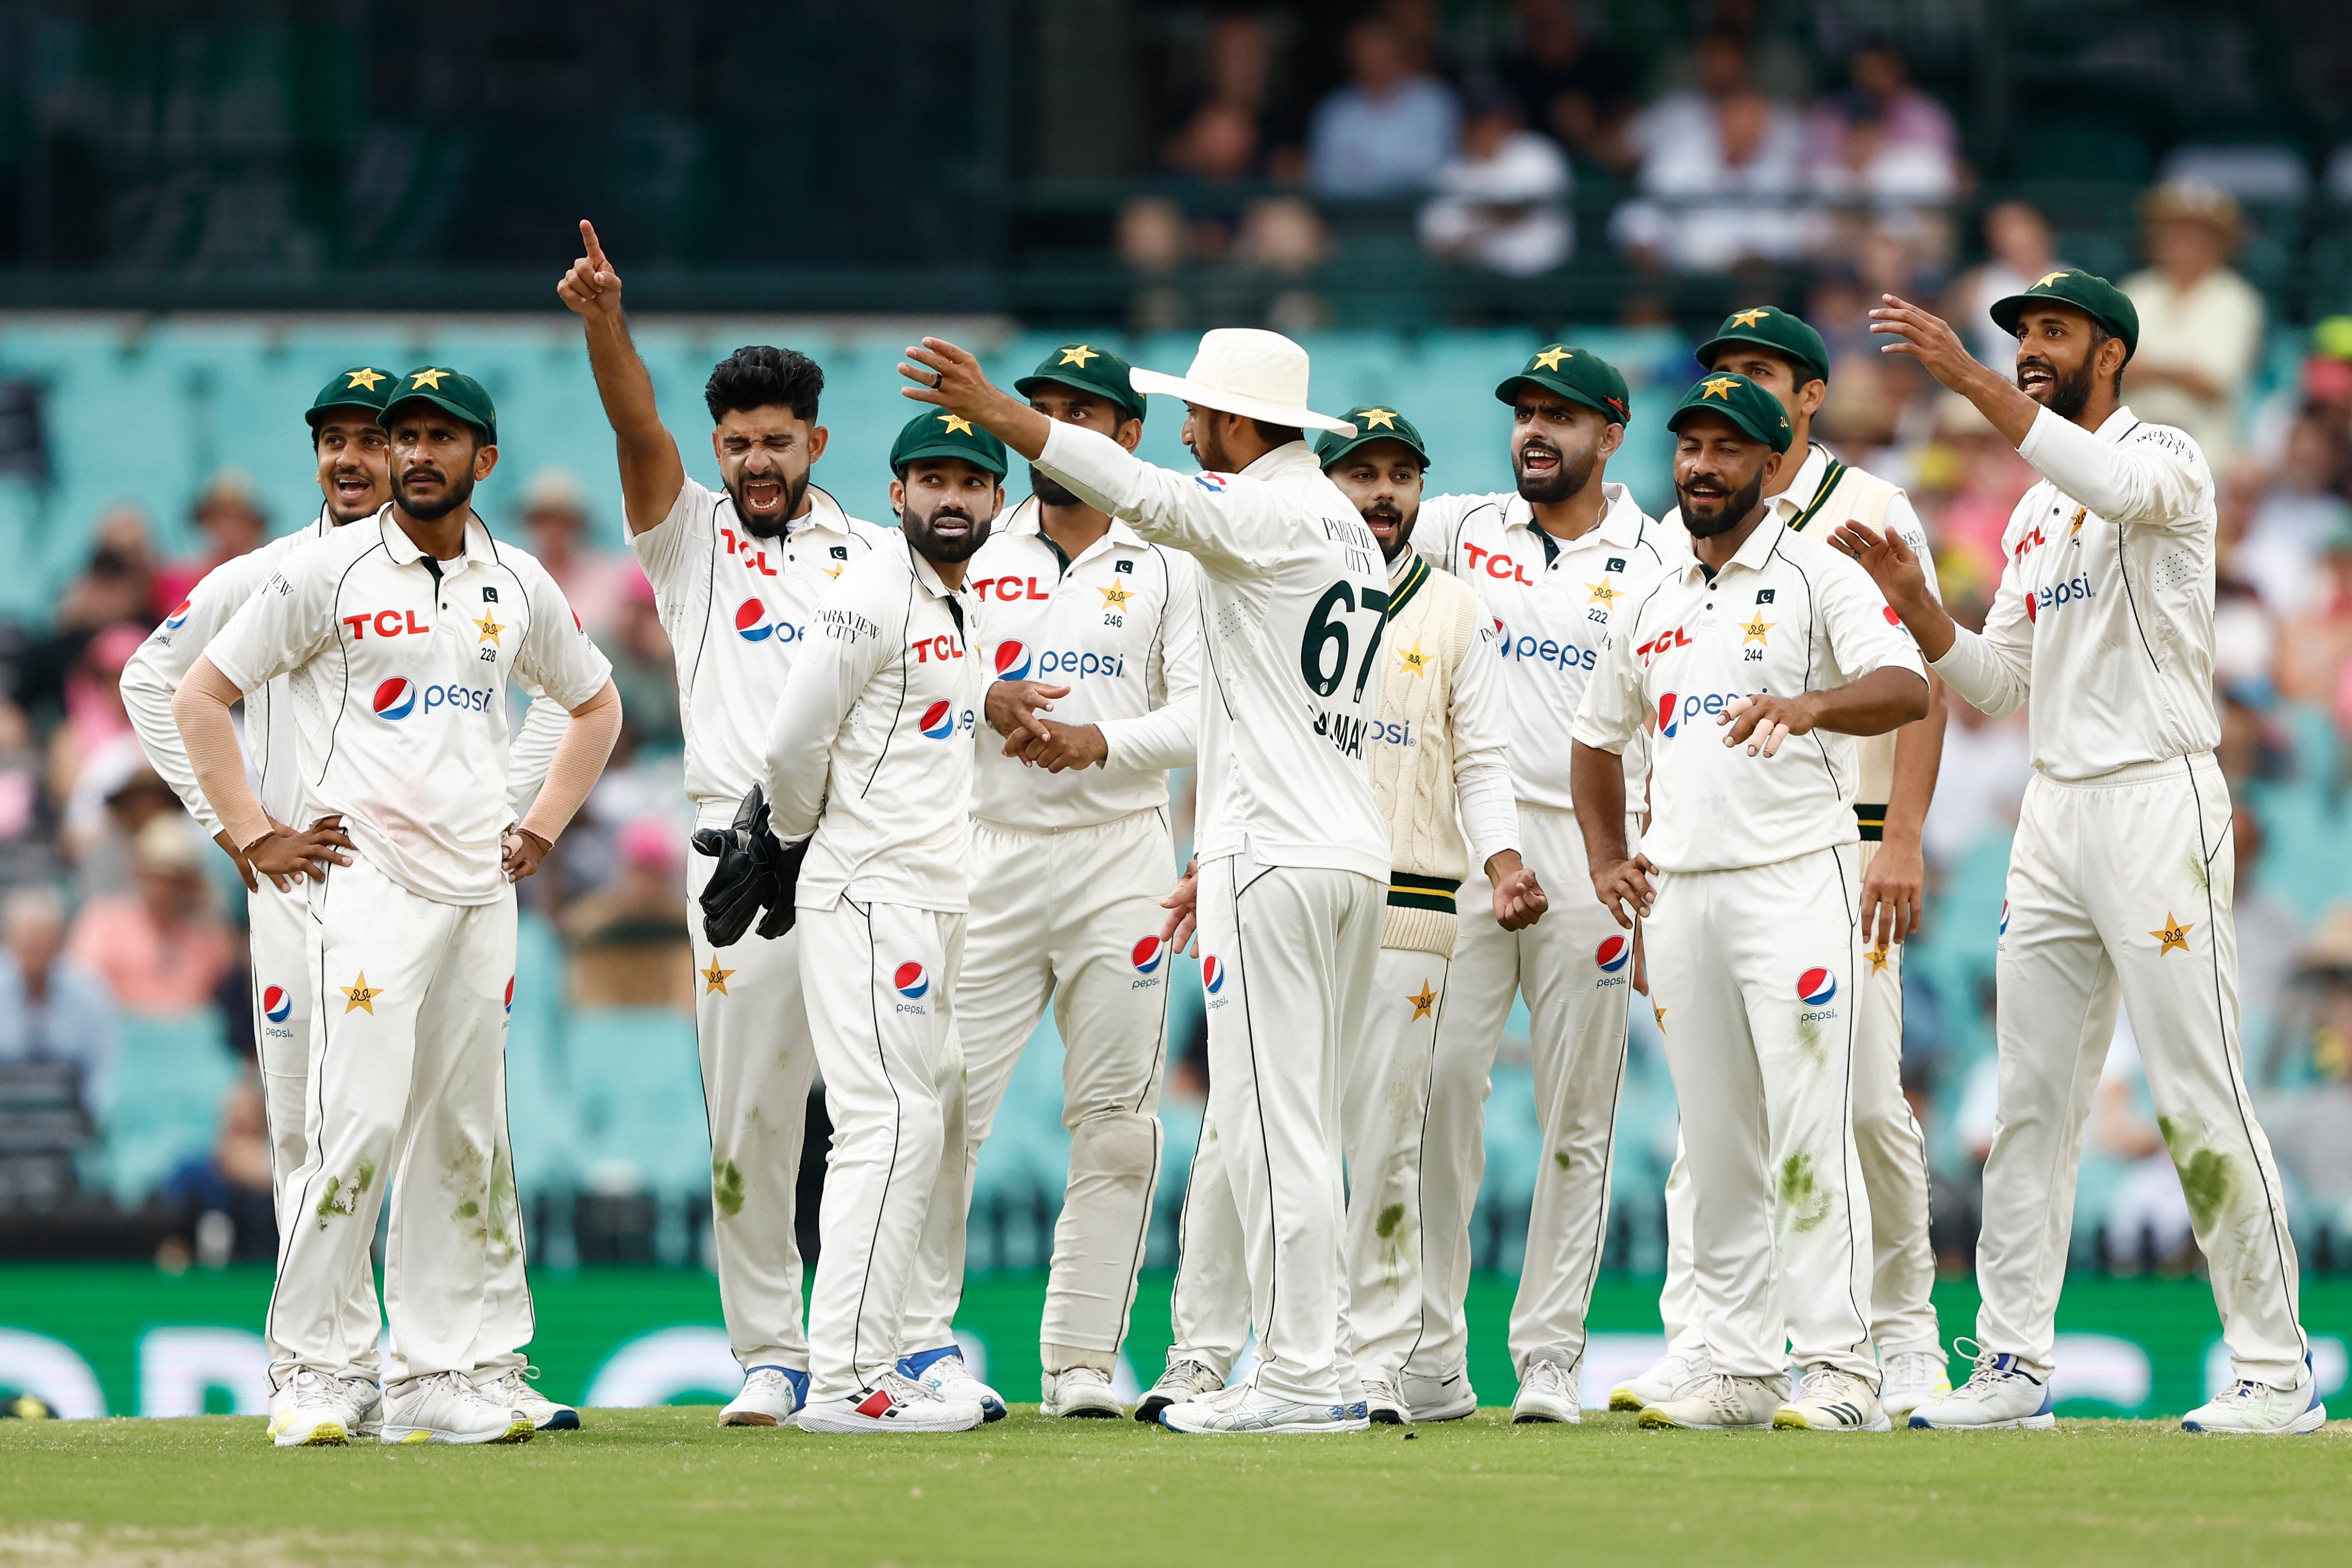 AUS vs PAK | Twitter reacts as disciplined Pakistan restrain Australia before bad light stops play on Day 2